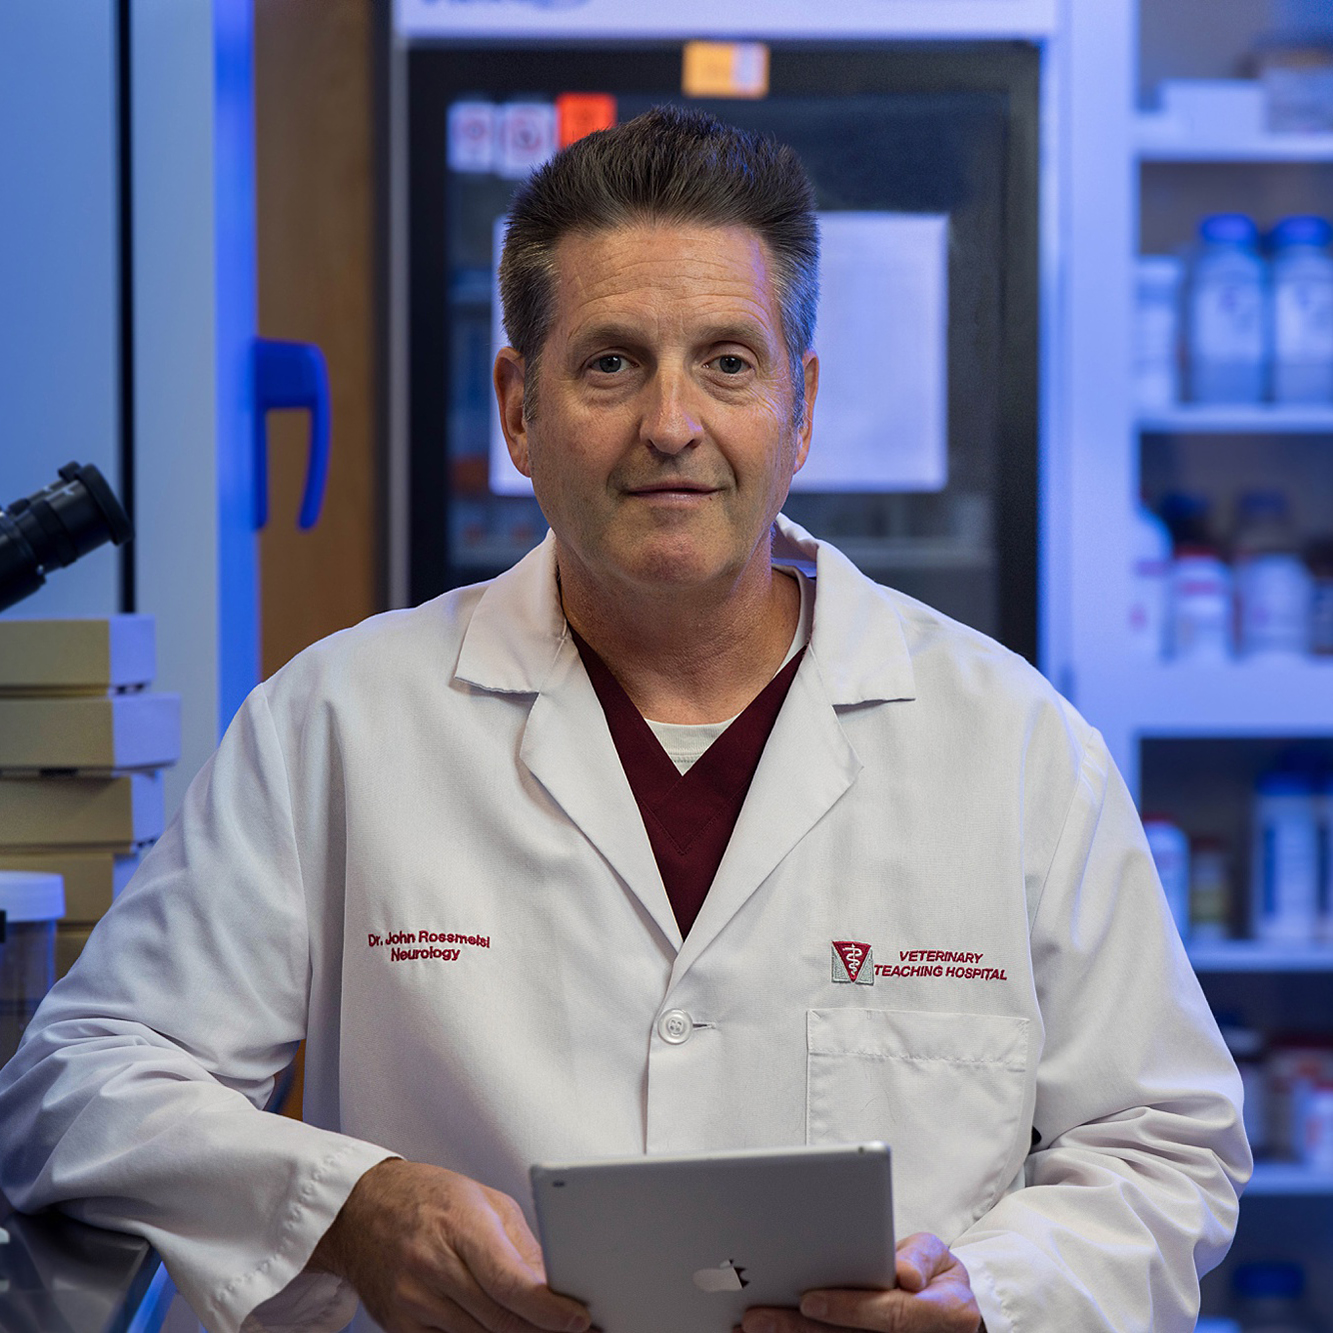 John Rossmeisl in a white lab coat in his lab.